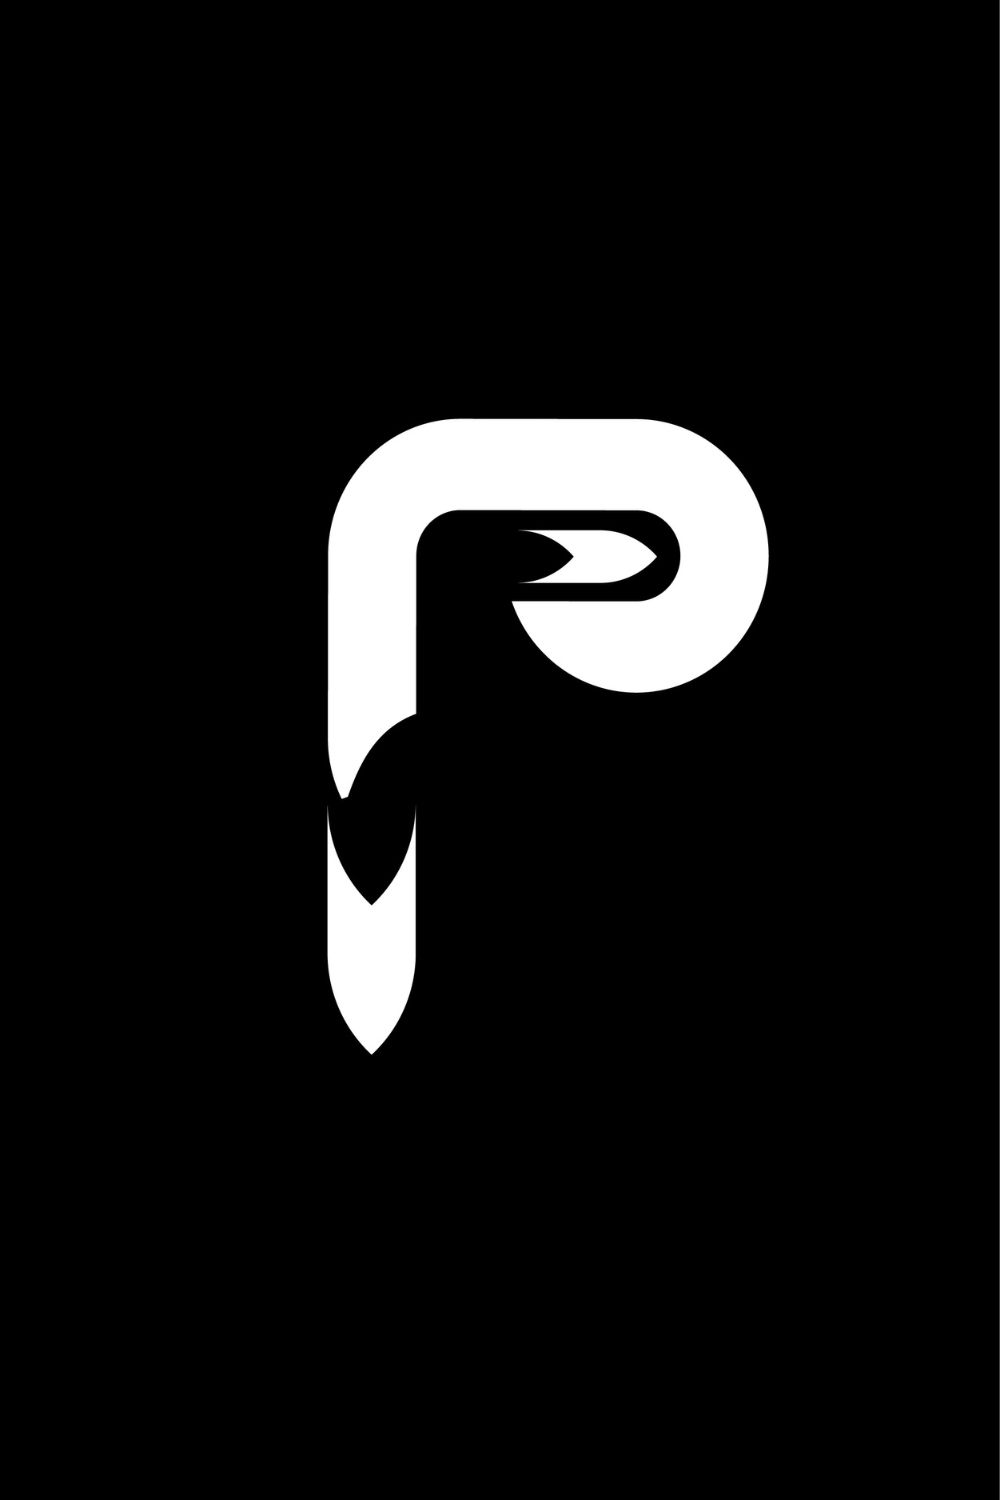 Letter P Logo Luxury design vector template Linear pinterest preview image.